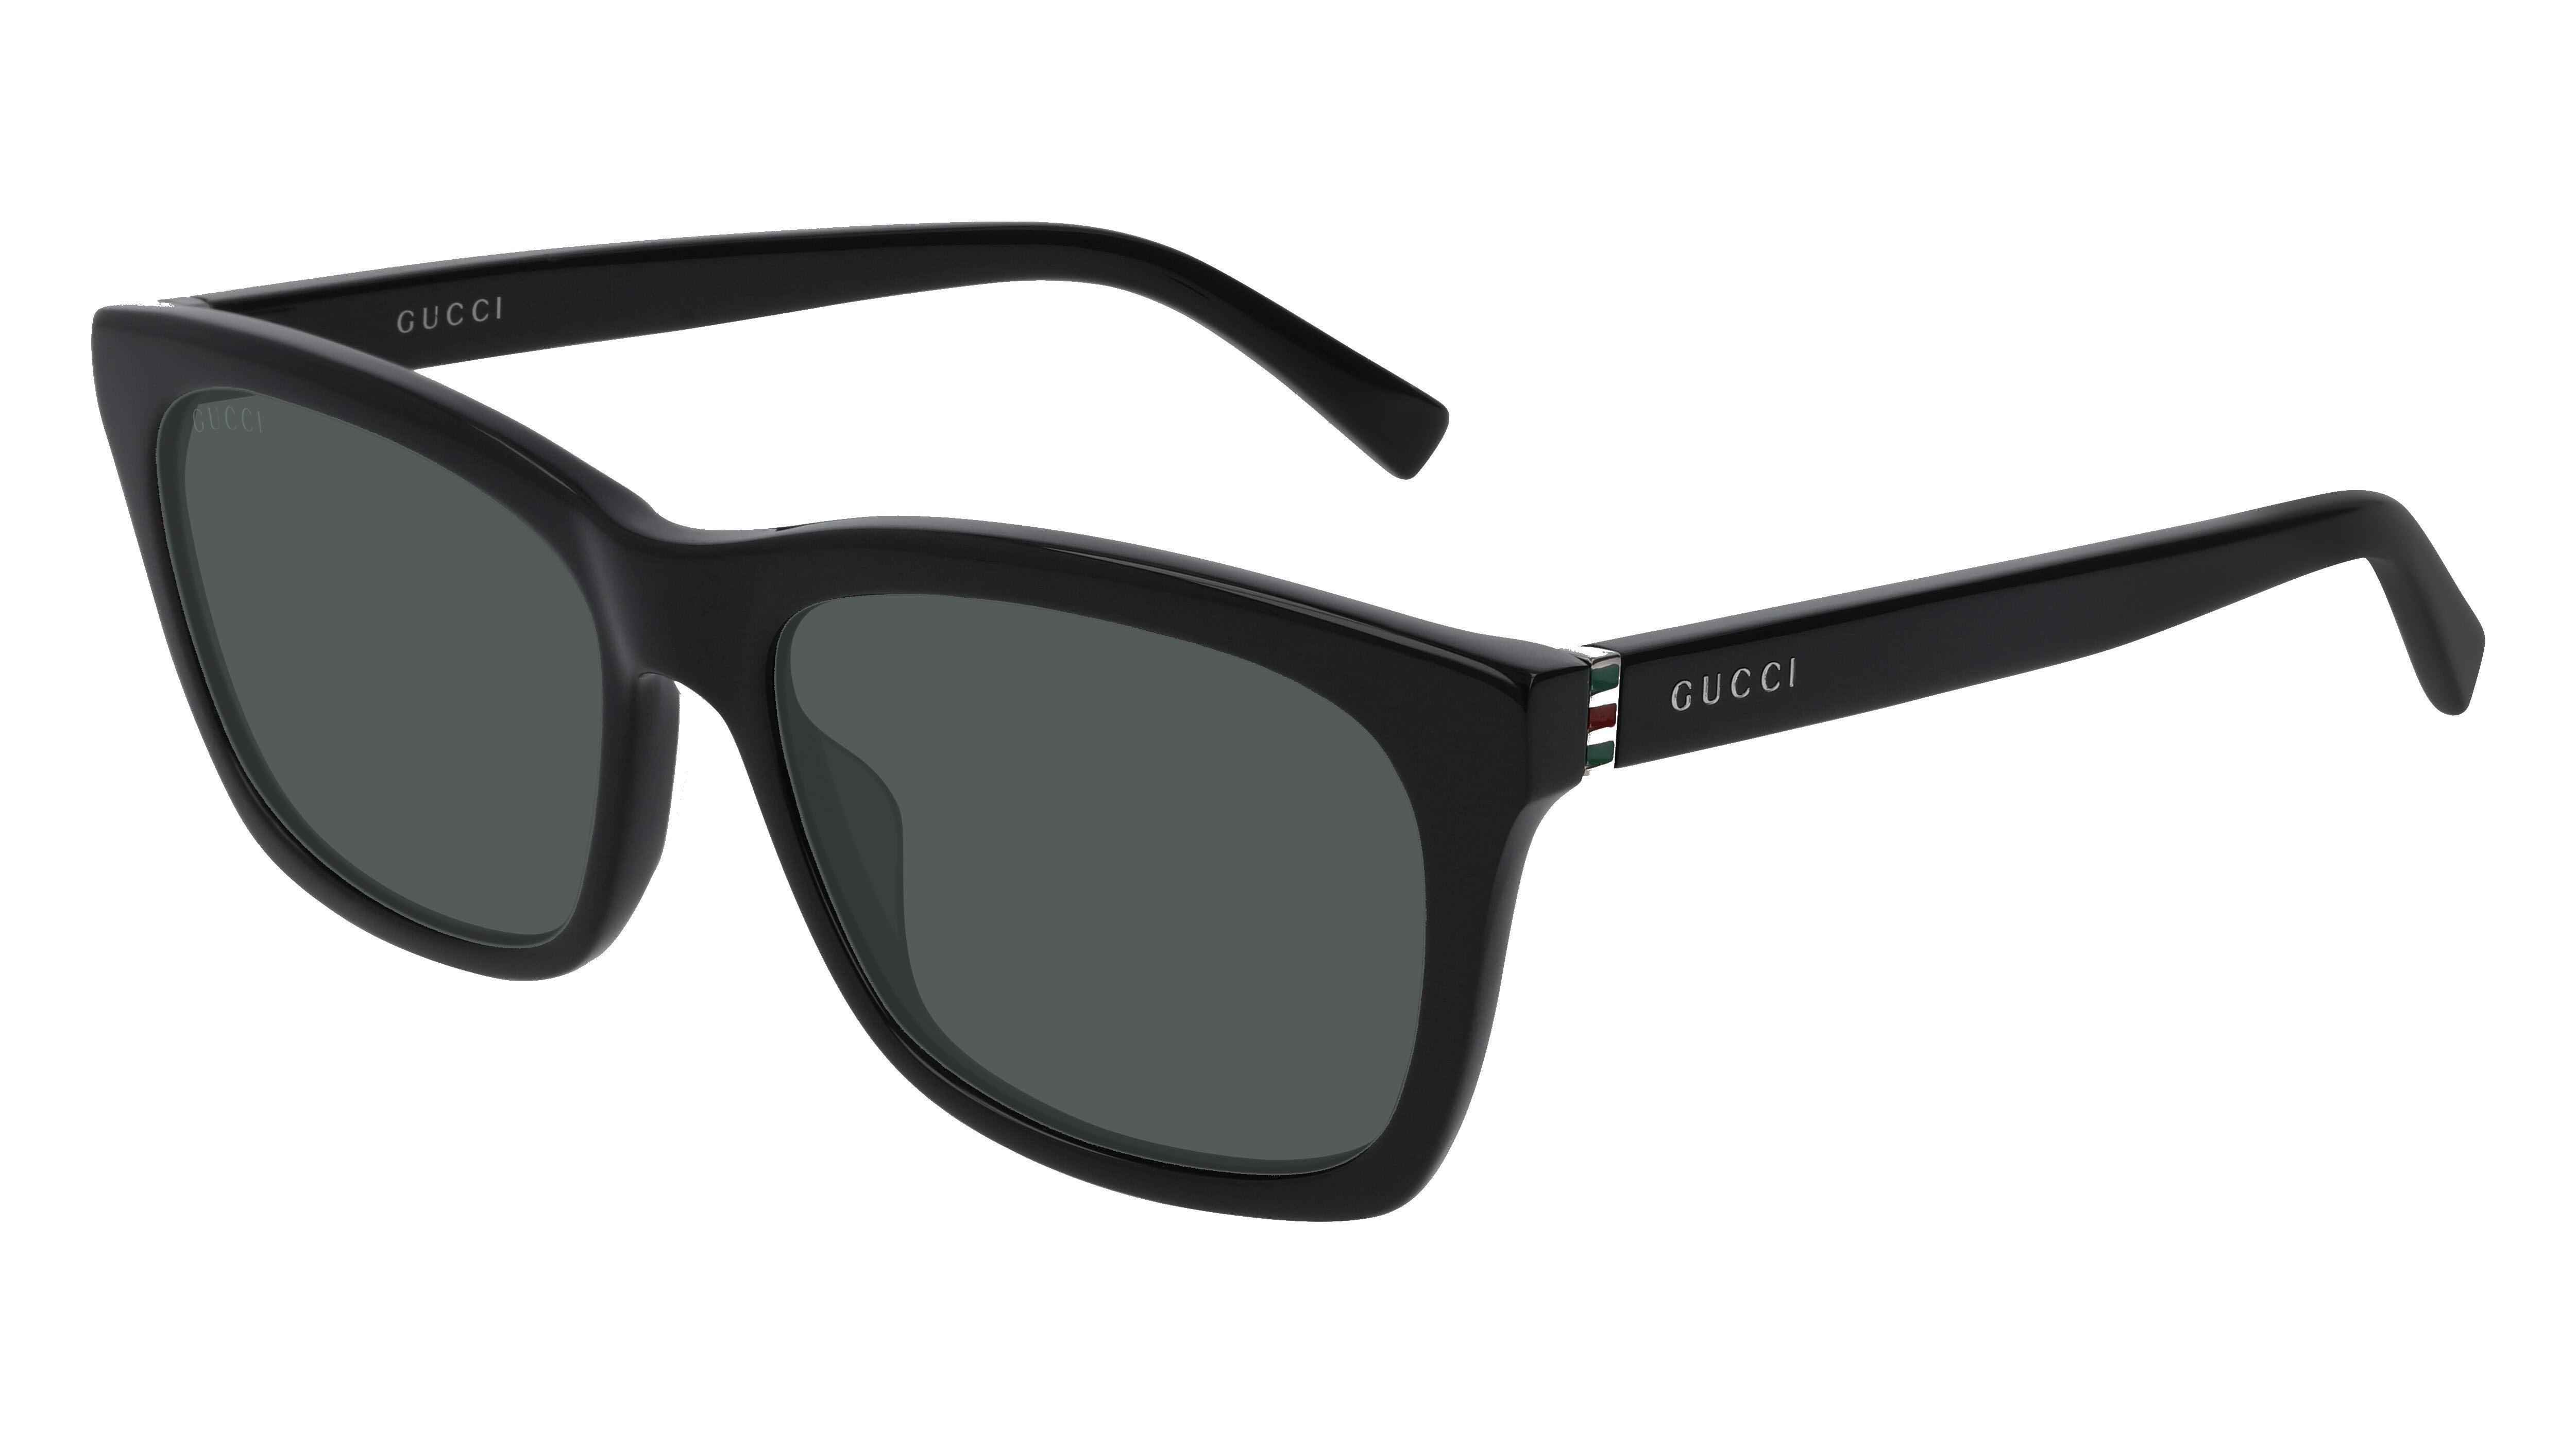 Gucci GG0449S Men's Rectangle Polarized Sunglasses in Black,Grey (Black) -  Save 60% - Lyst